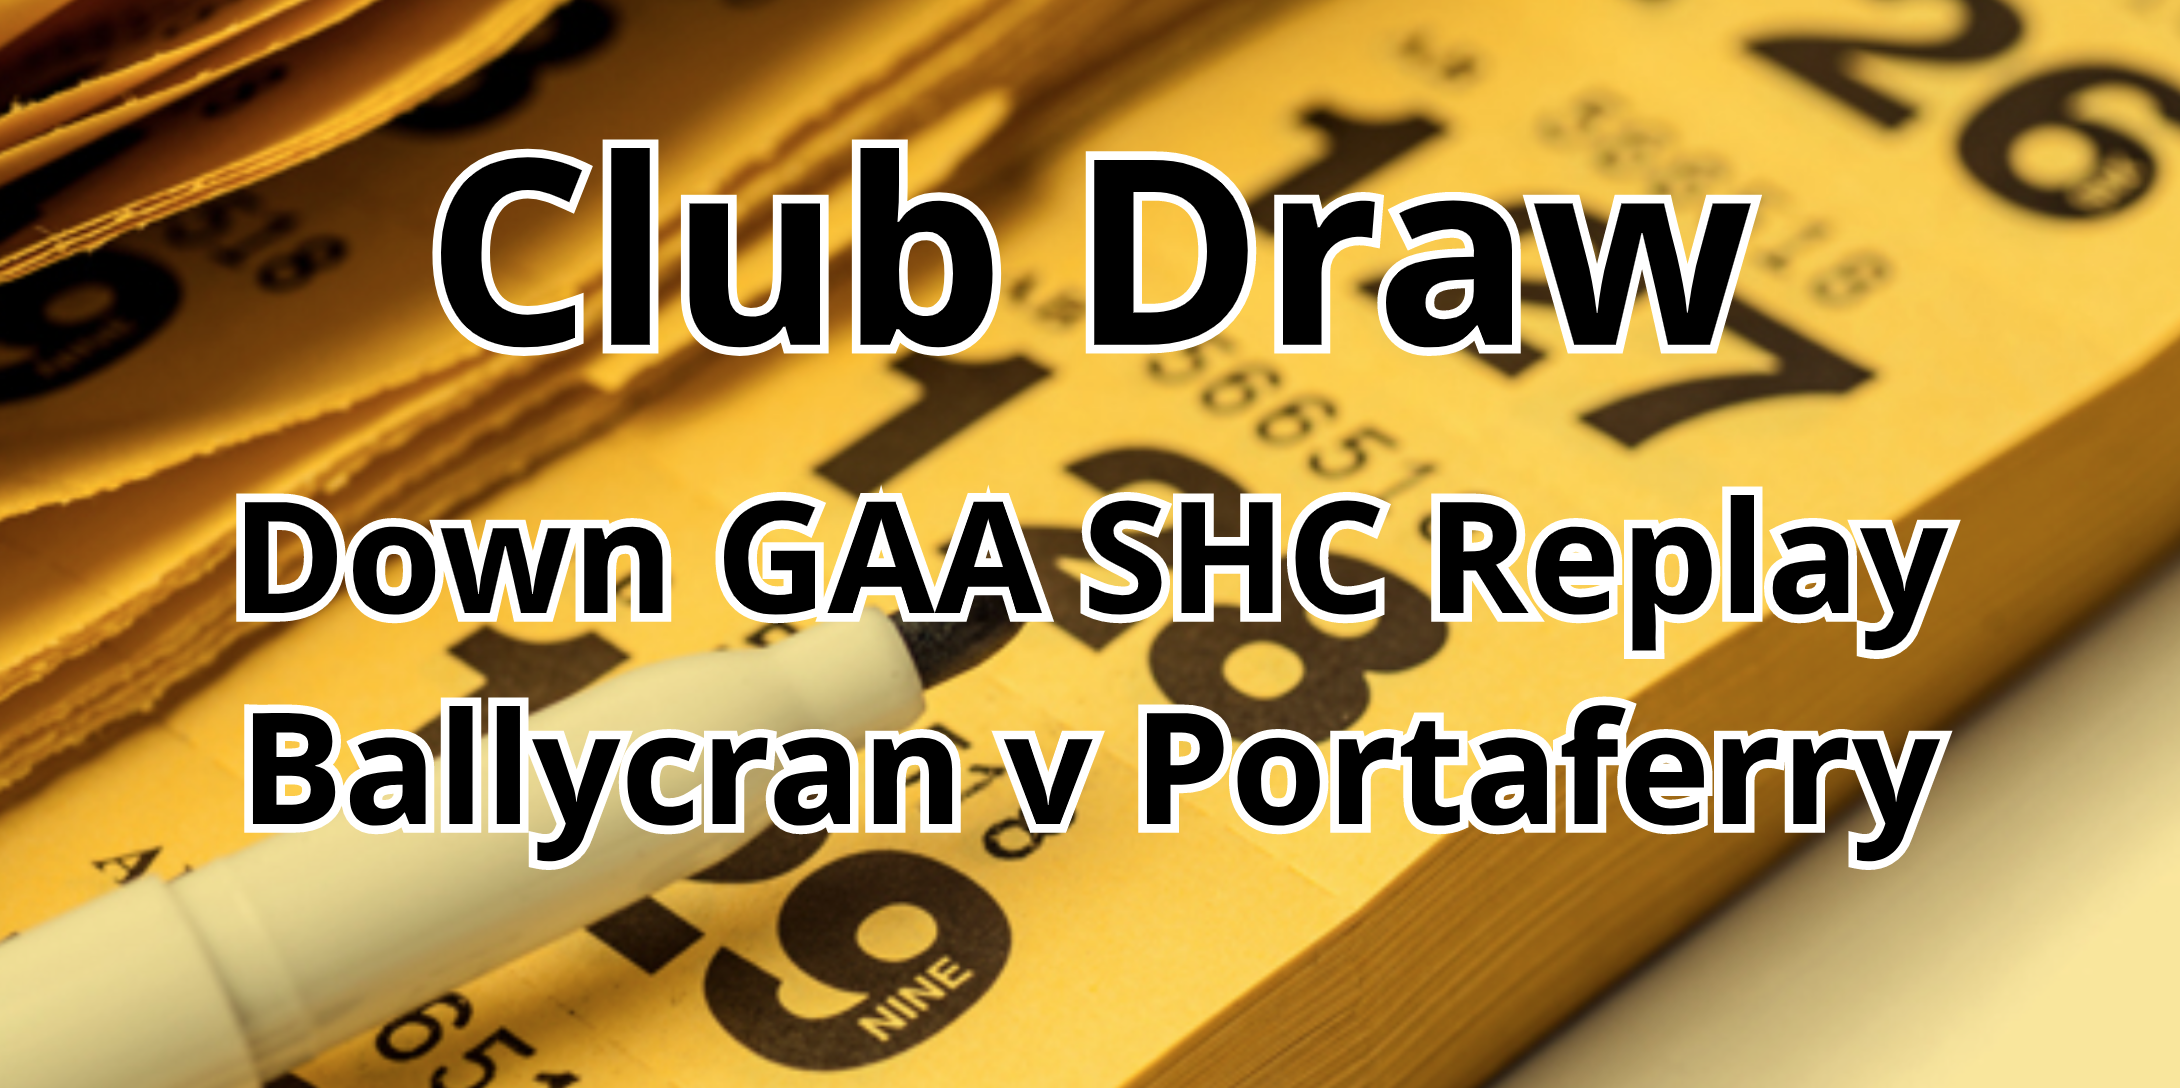 Down GAA SHC Championship final replay ticket draw